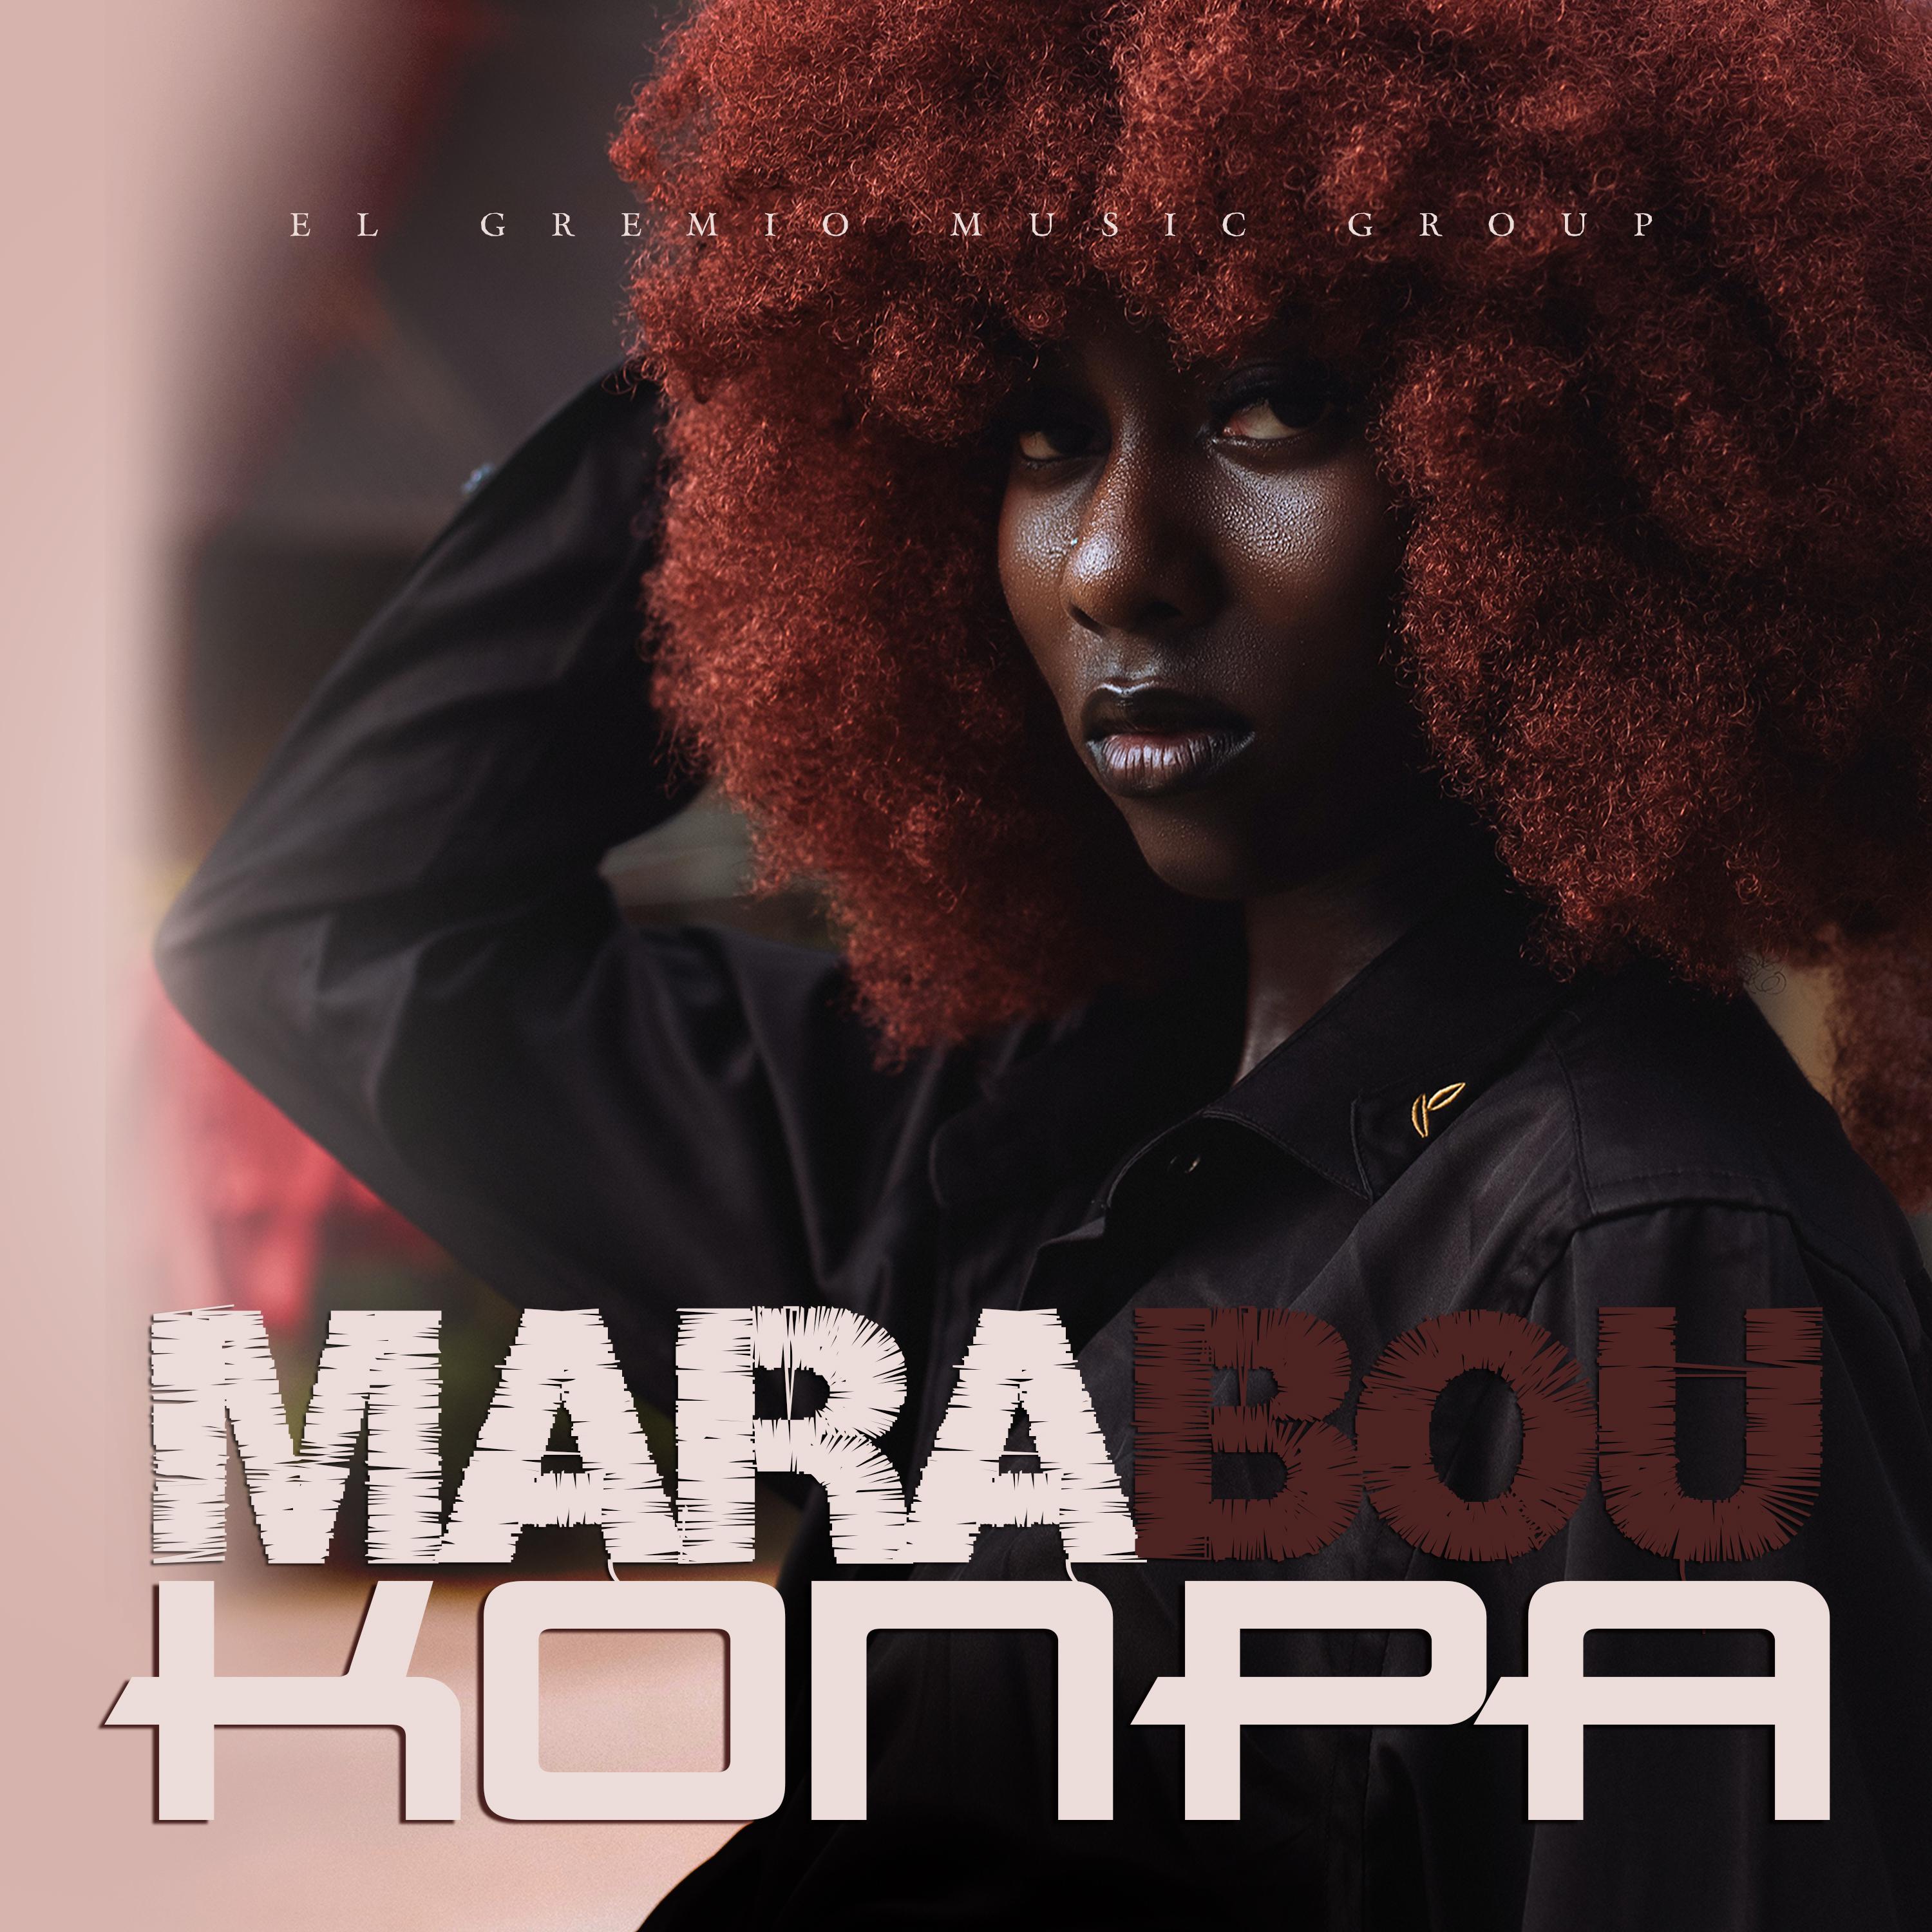 Постер альбома Marabou